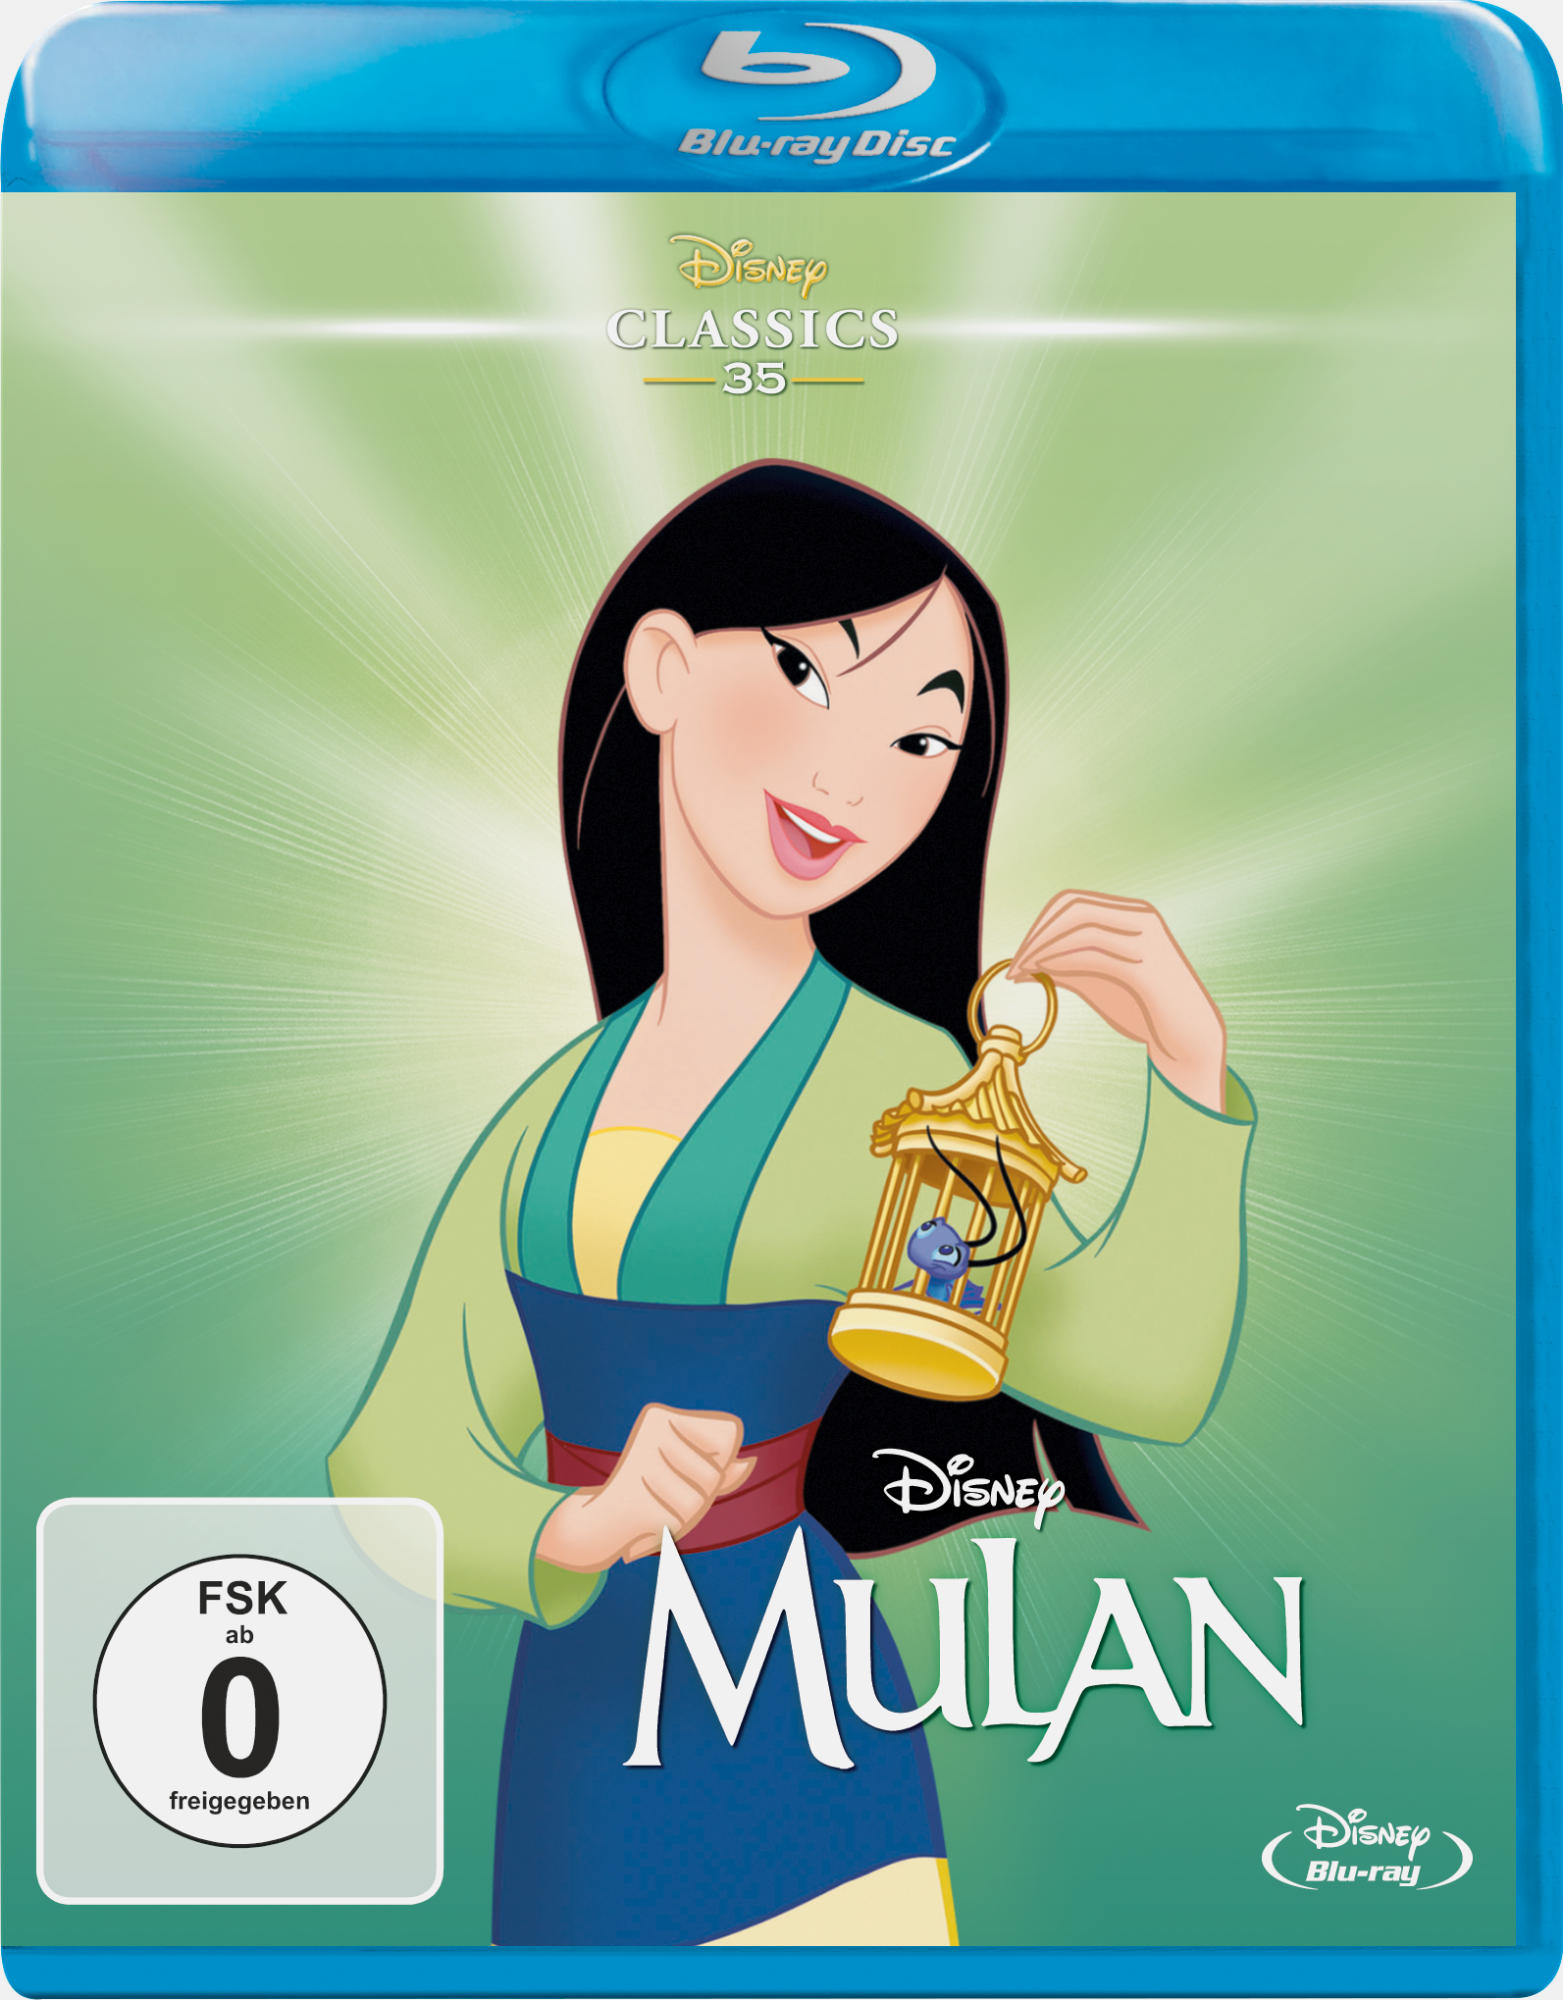 Mulan (Disney Blu-ray Classics)